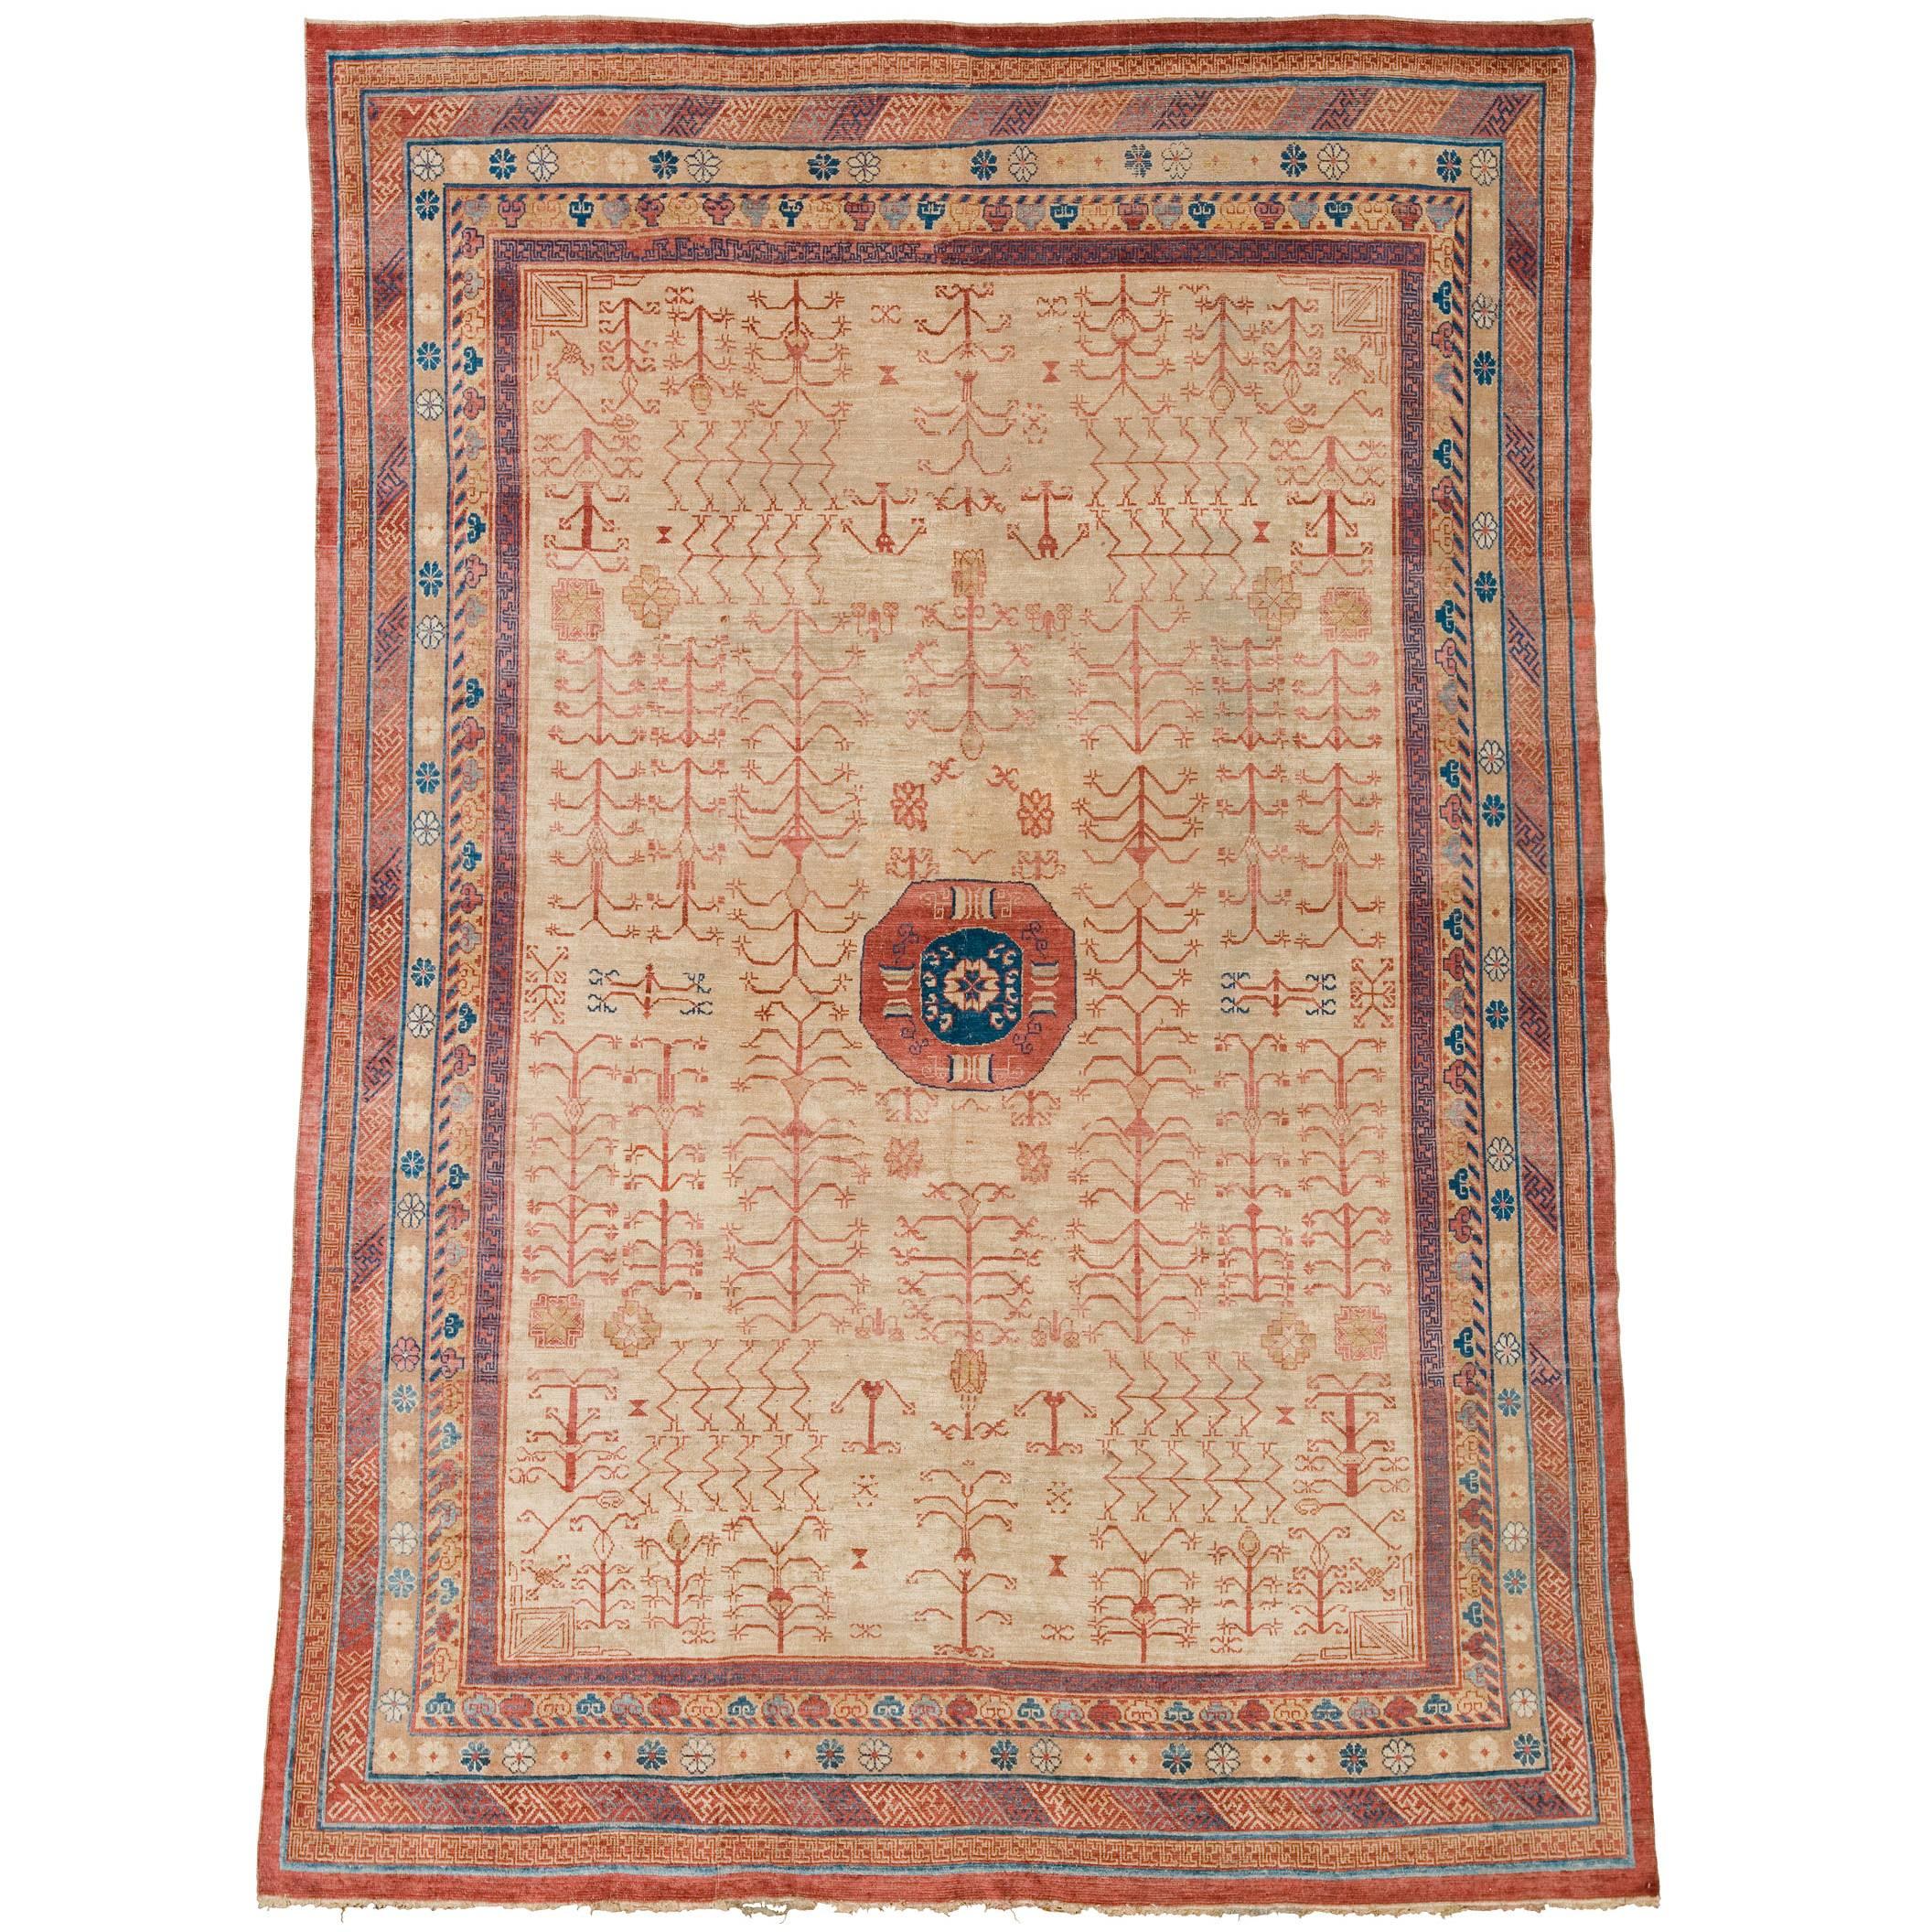 Late 19th Century Chinese Khotan Carpet